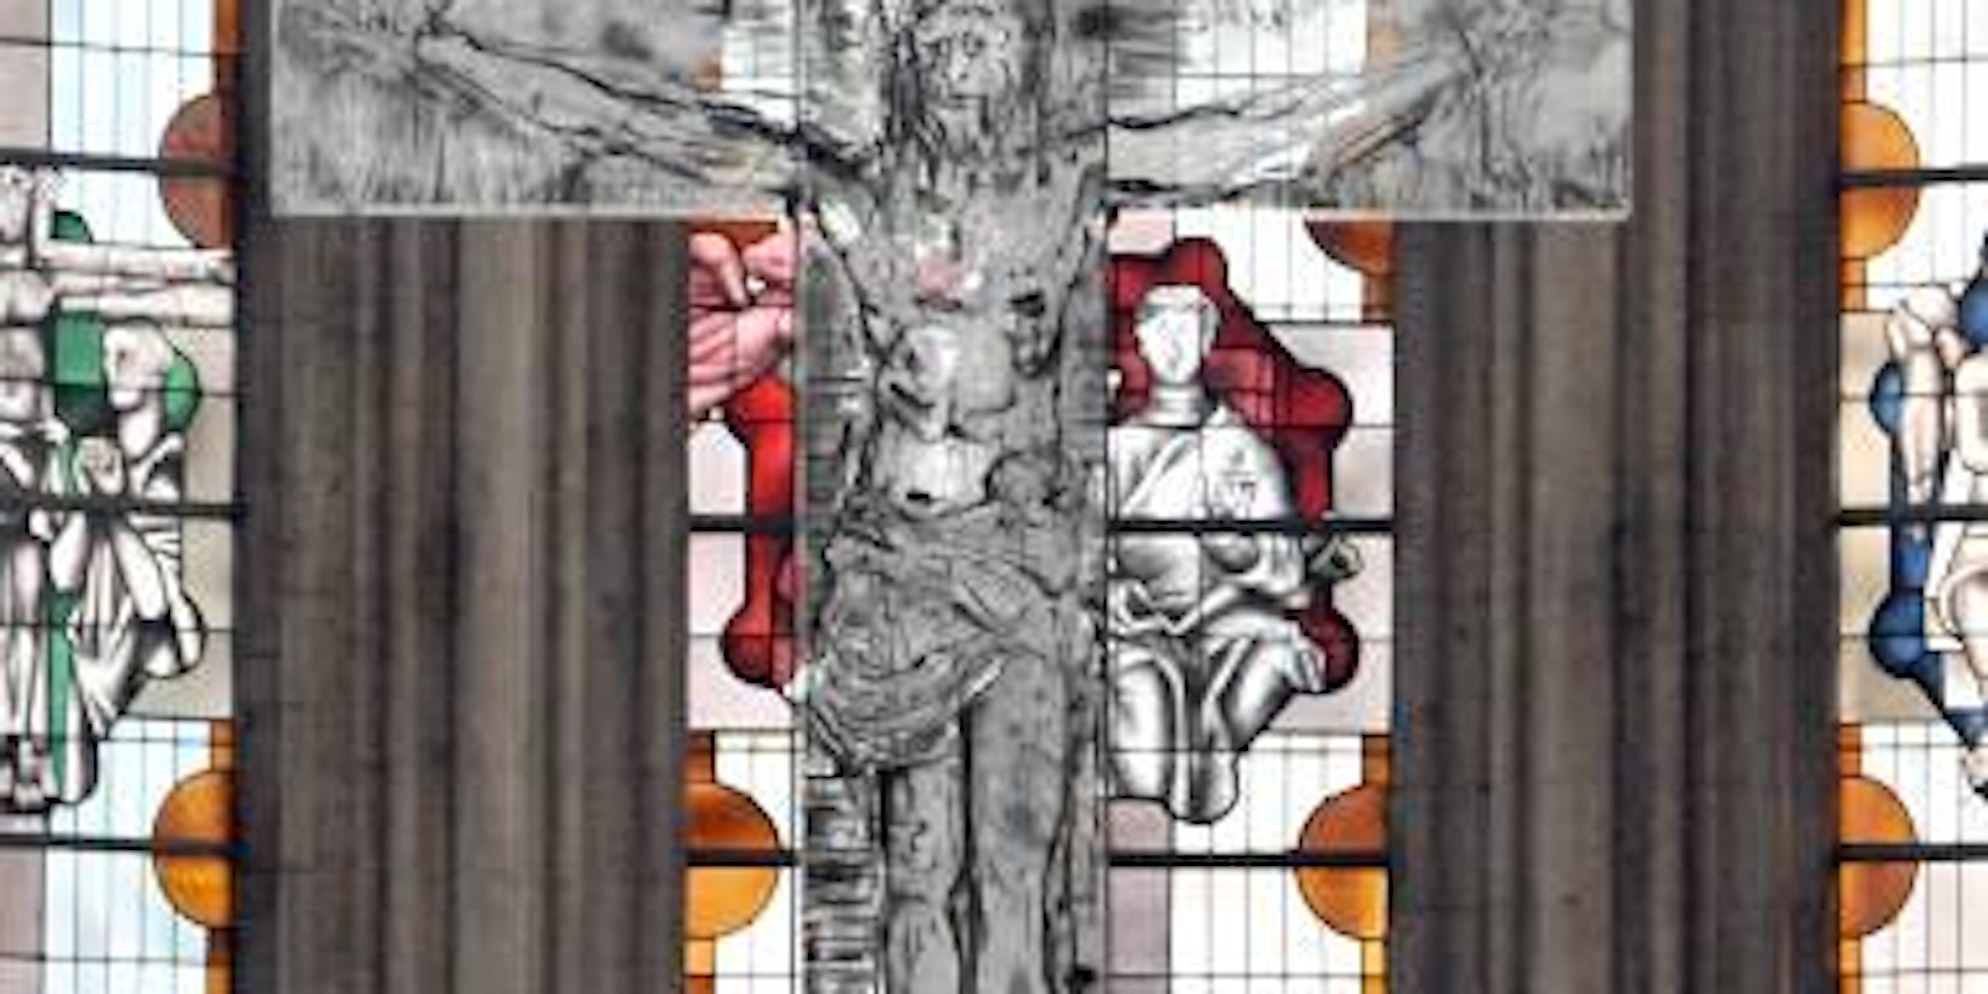 Der Düsseldofer Künstler Thomas Kesseler schuf das neue Glaskreuz. (Bild: Meisenberg)